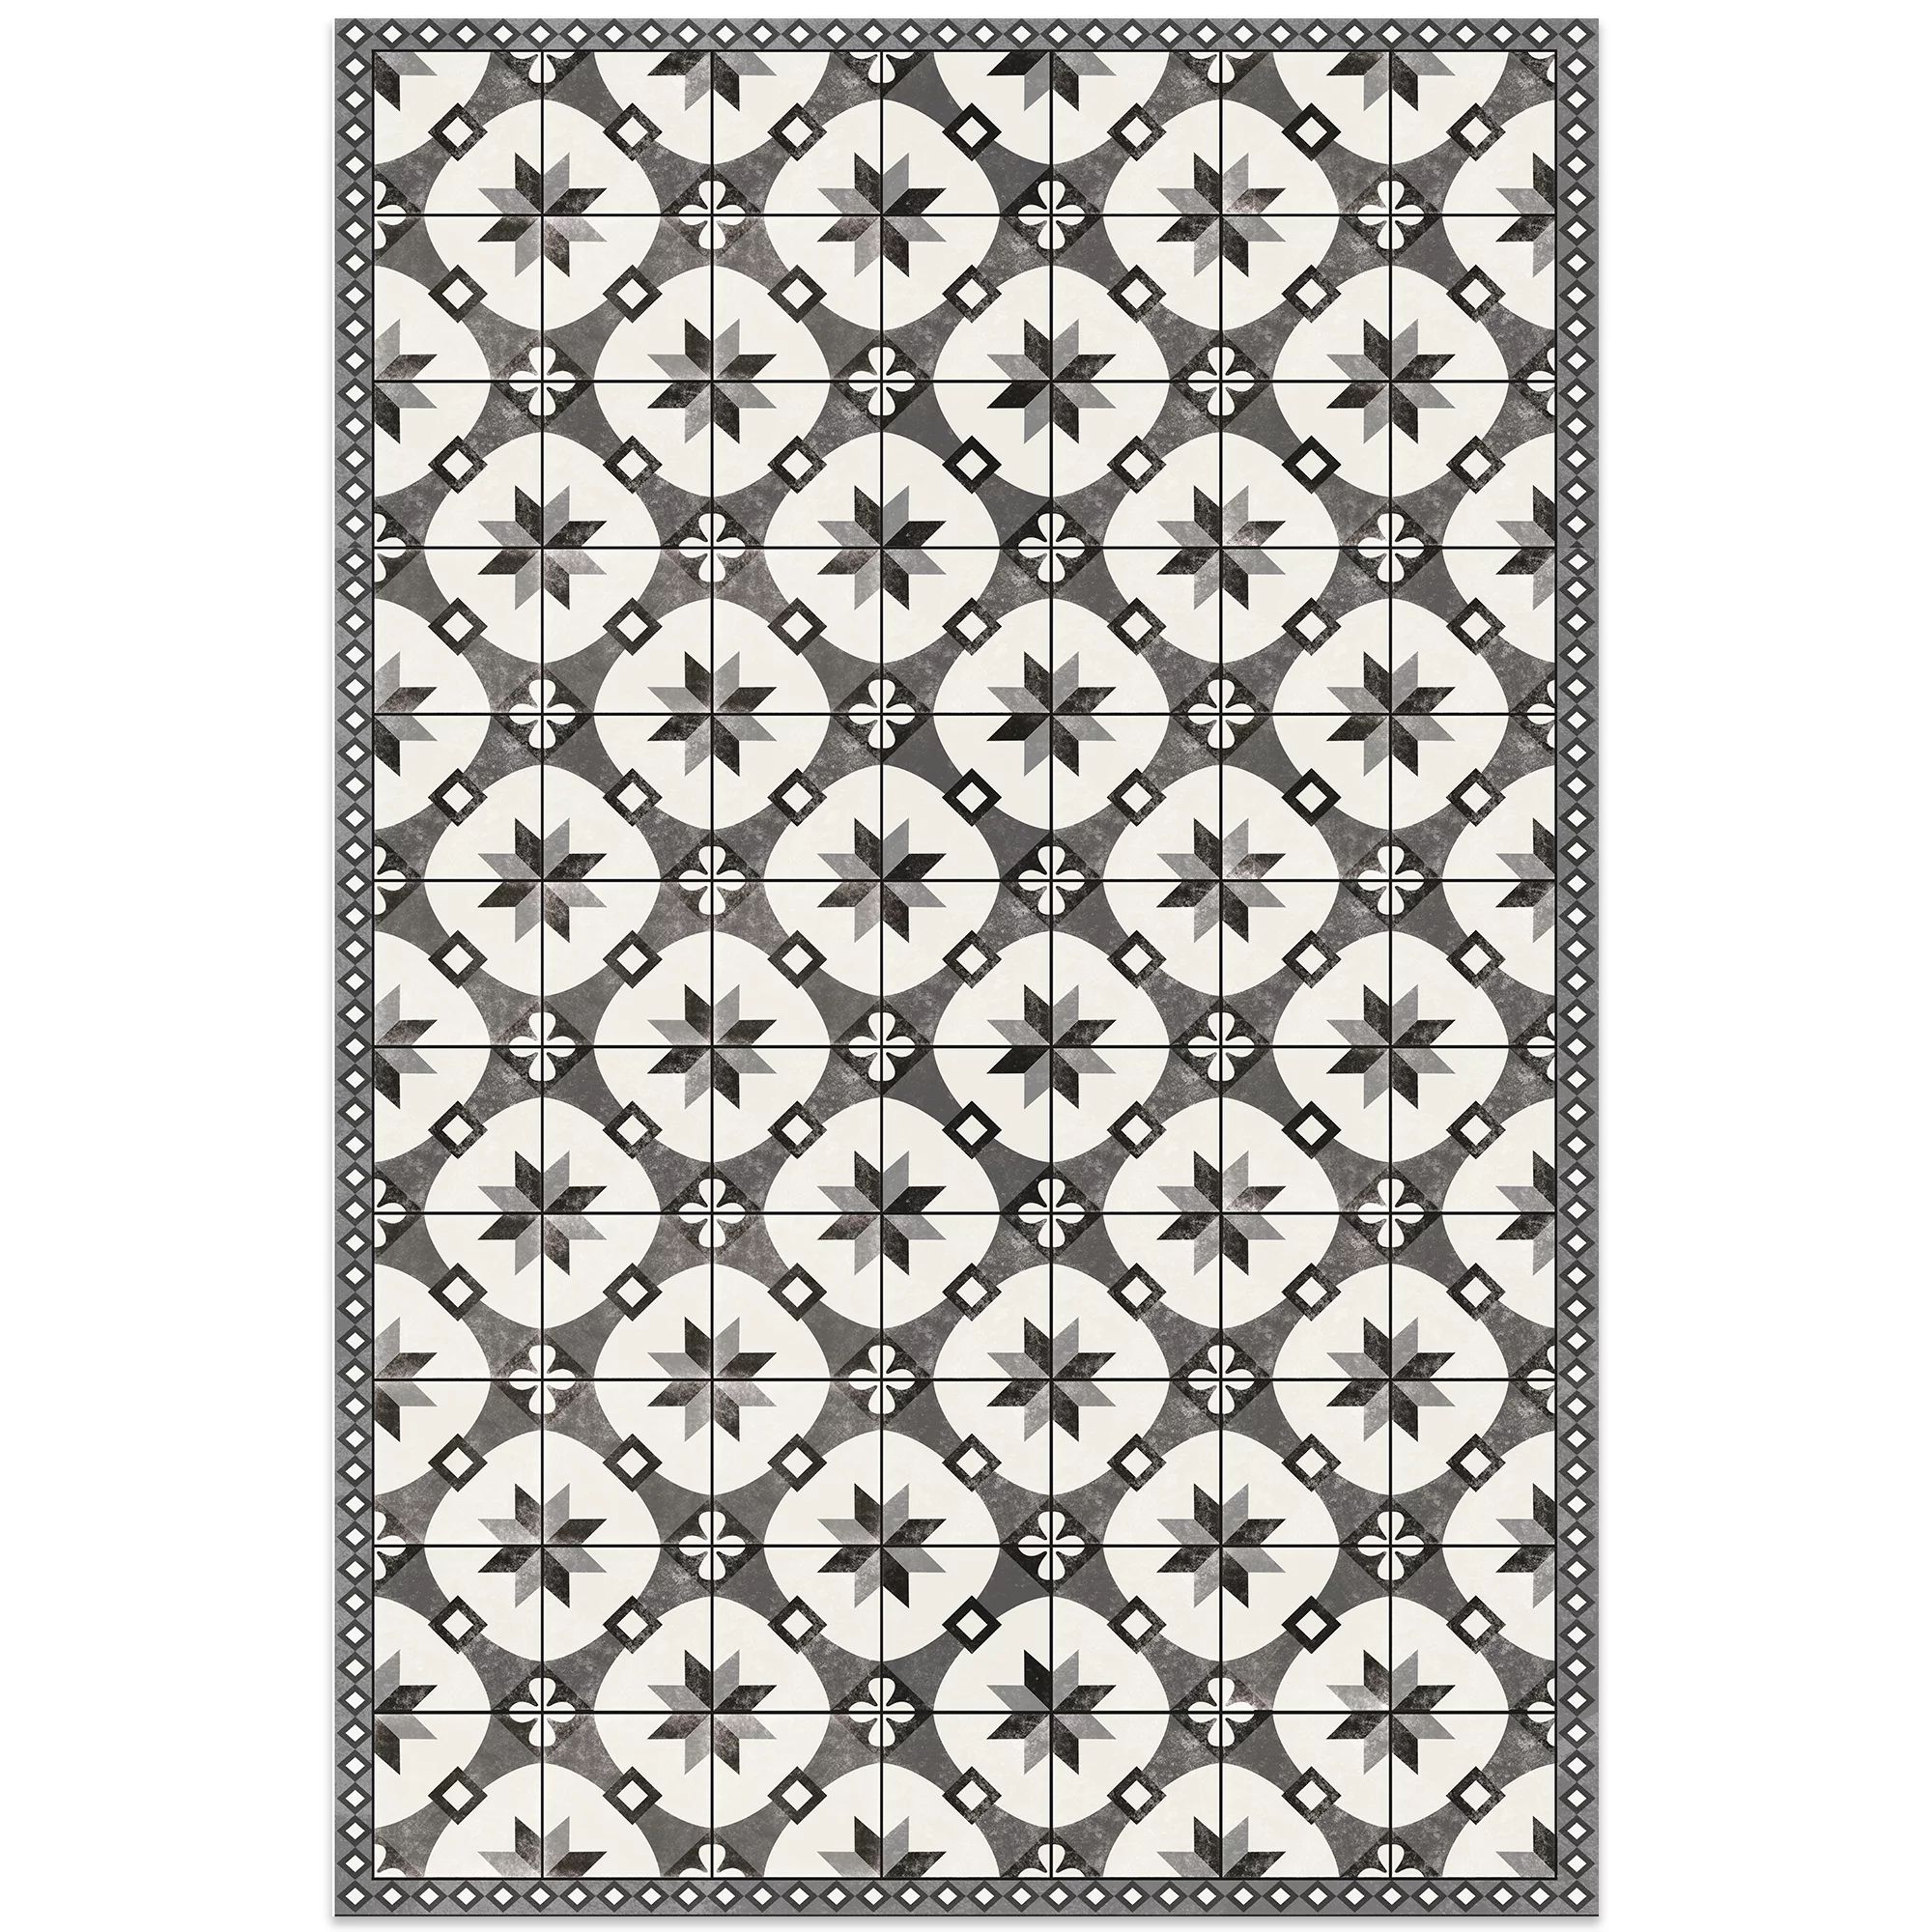 Mosaic Tile Decorative Vinyl Floor Mat – 2' x 3' | Walmart (US)